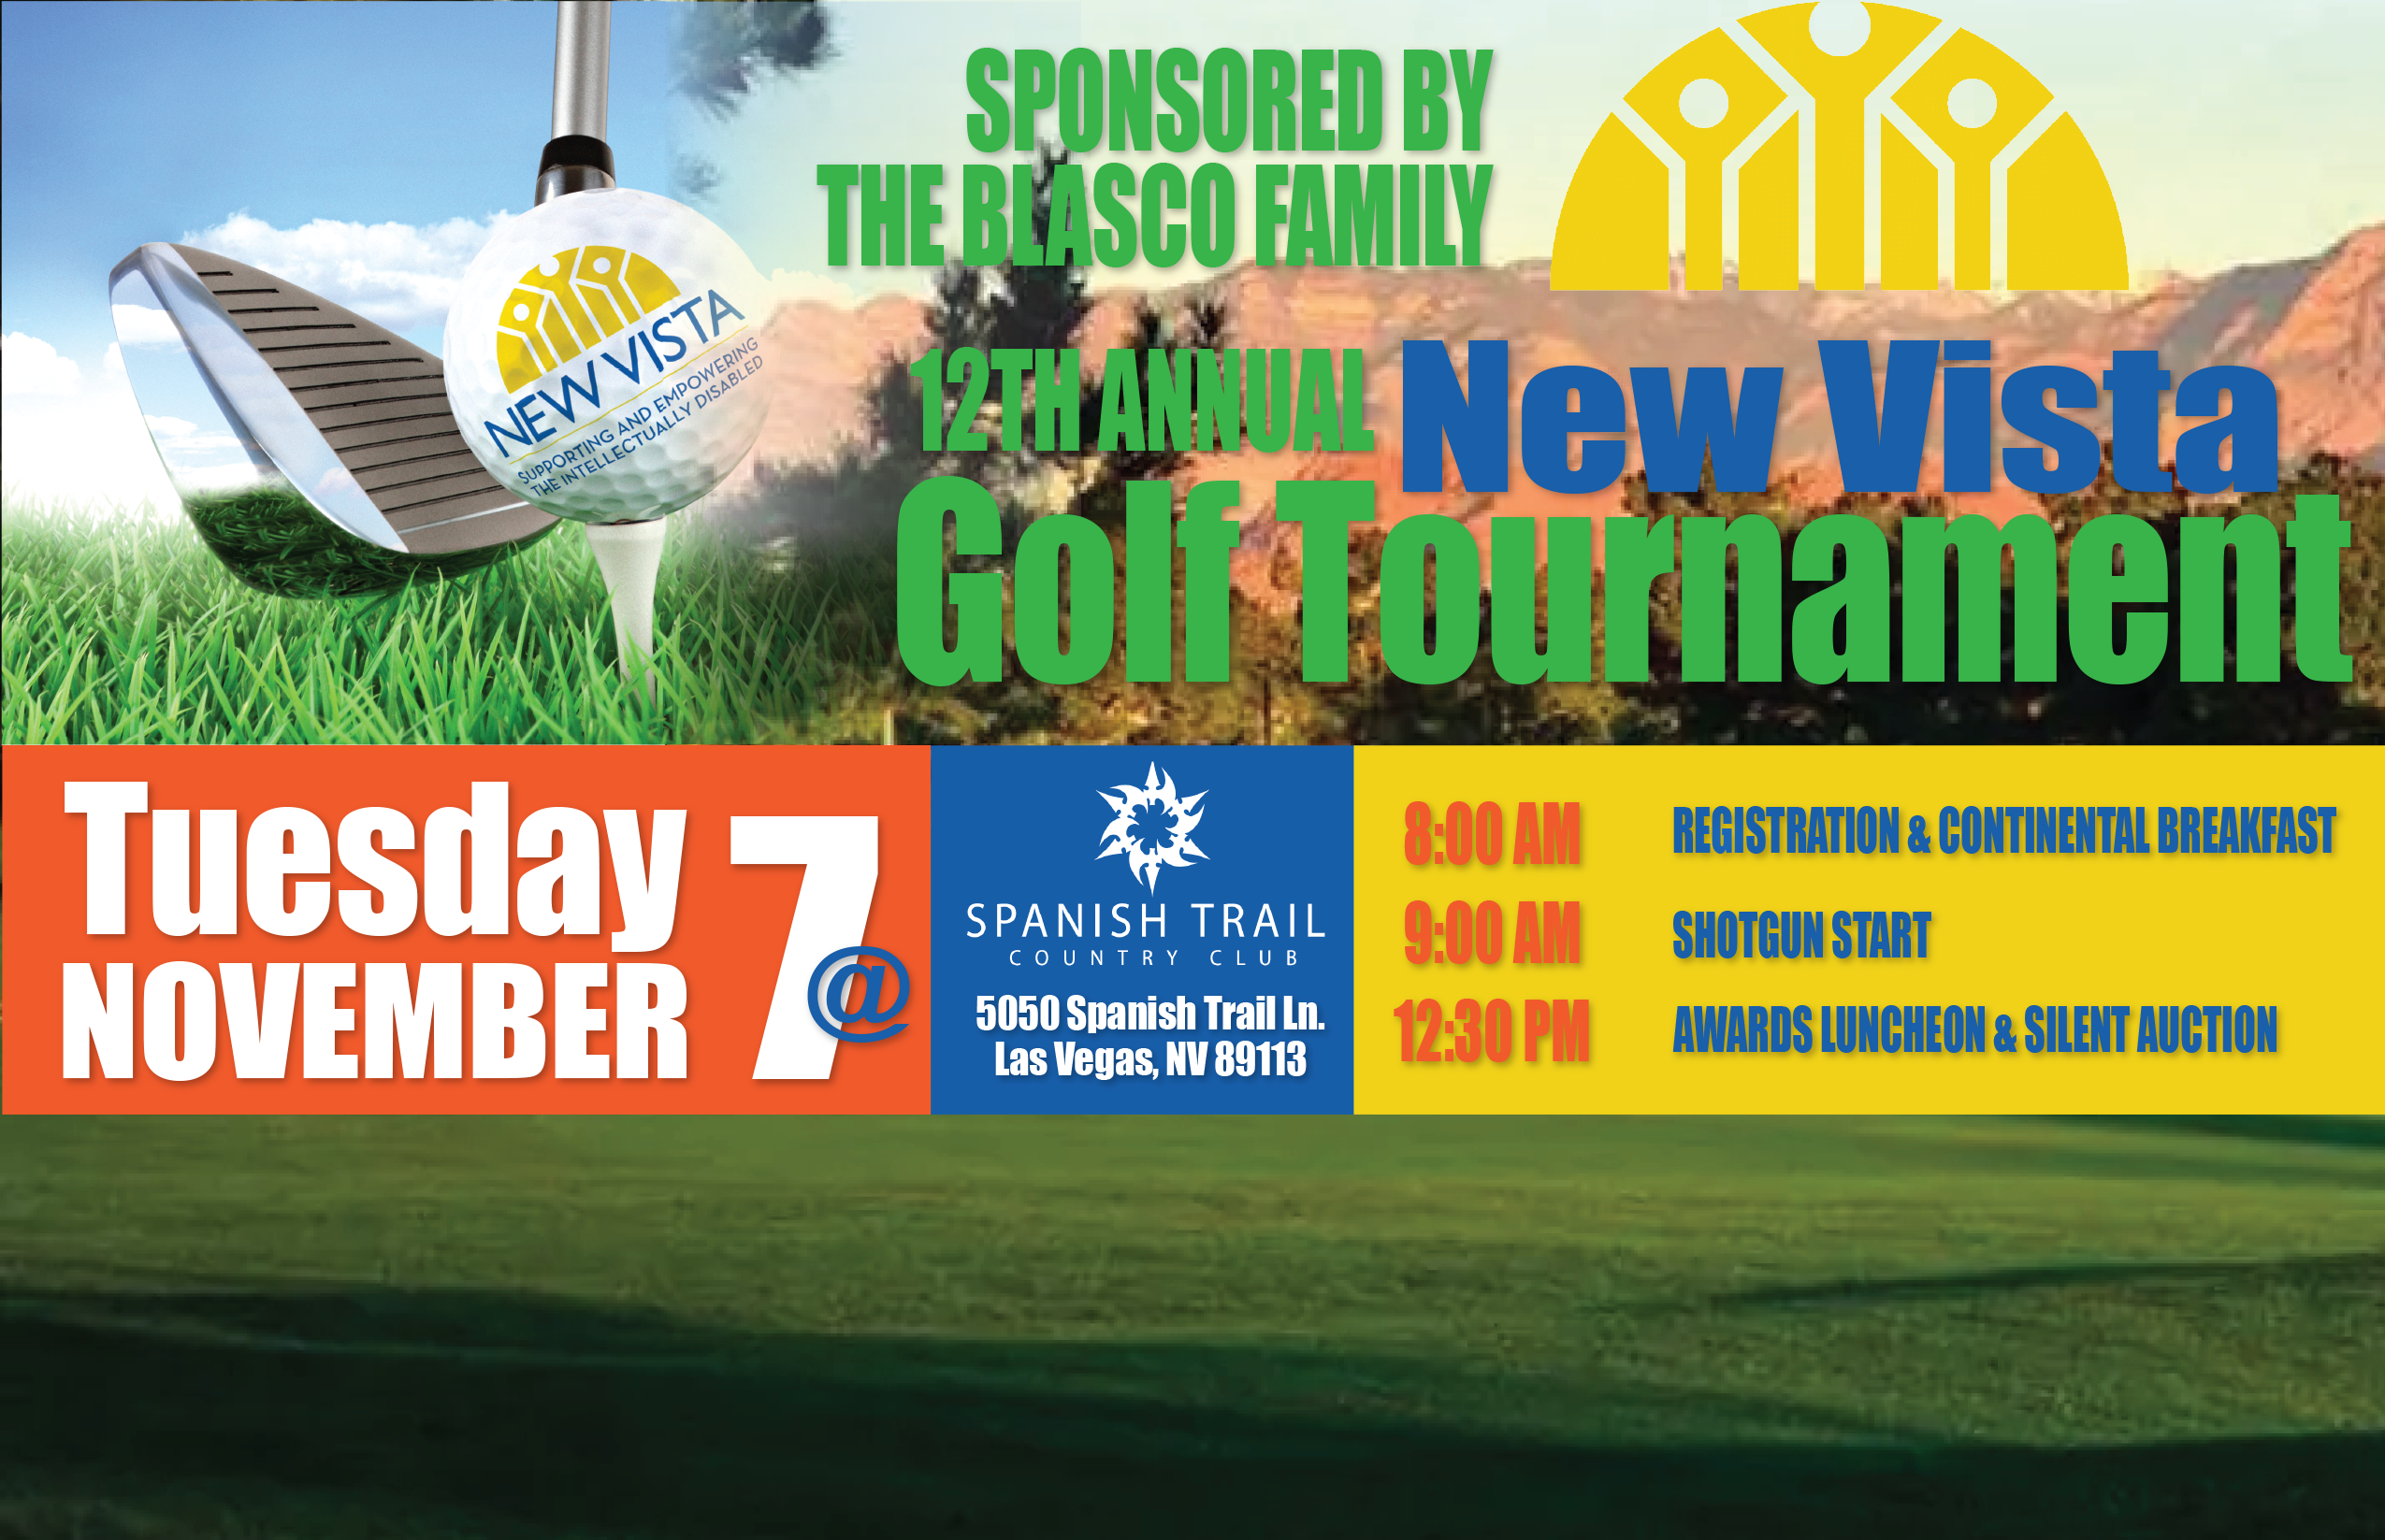 New Vista's 12th Annual Golf Tournament